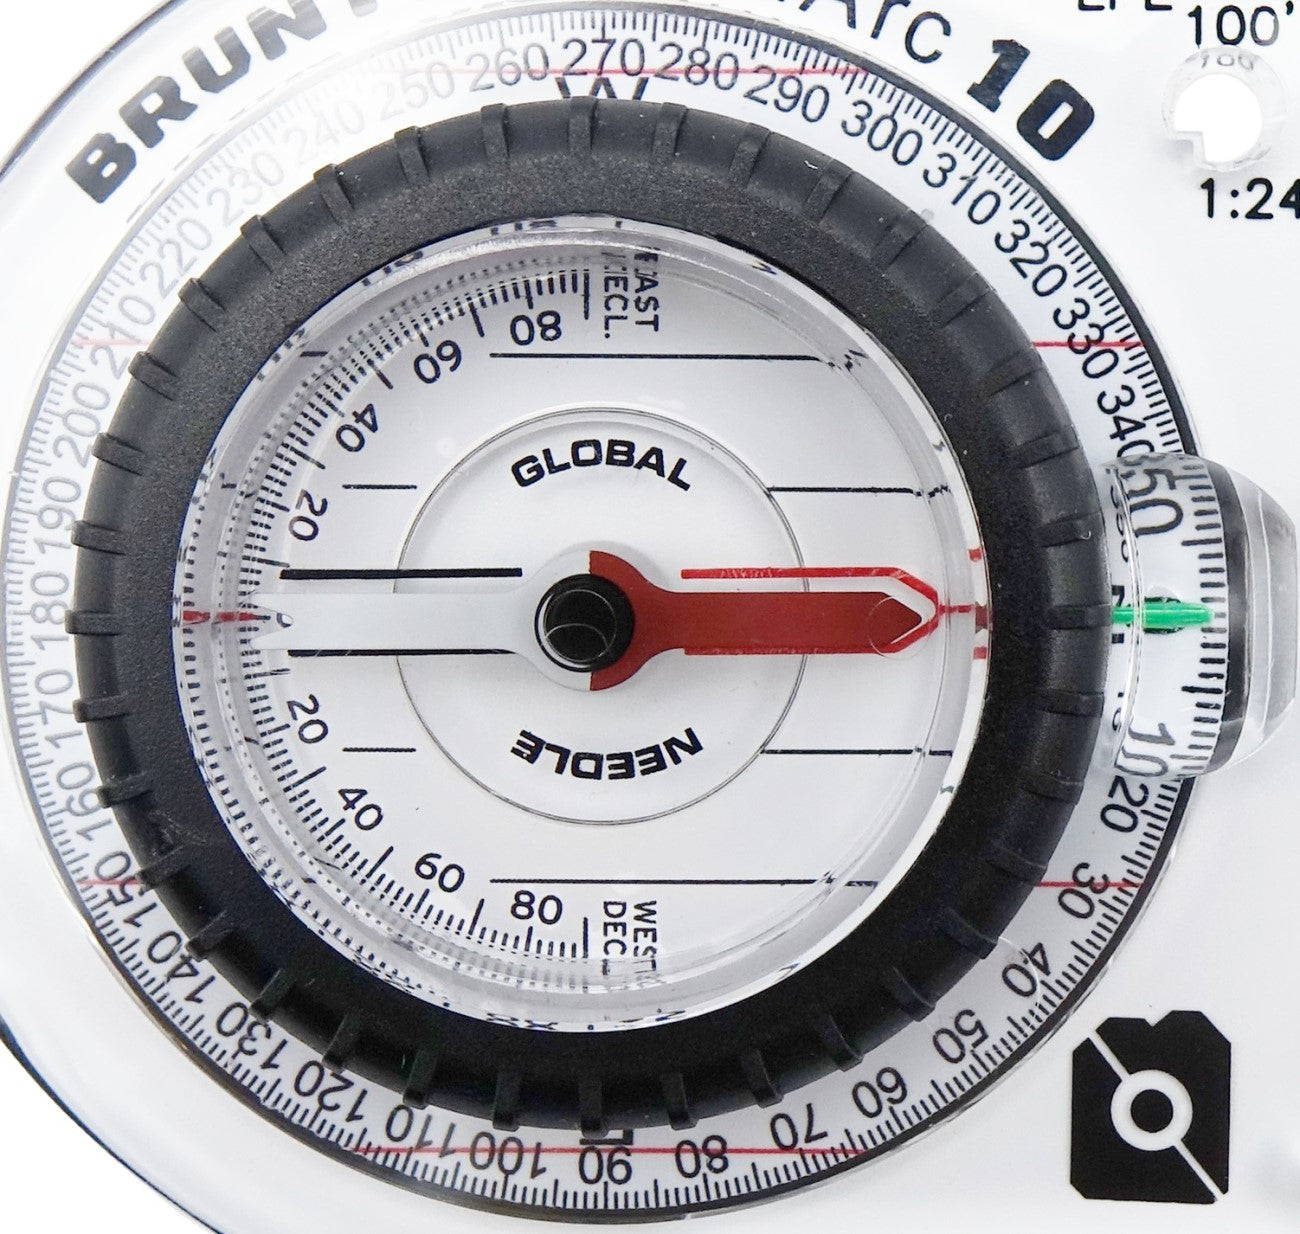 Brunton Truarc10 Luminous Compass - closeup